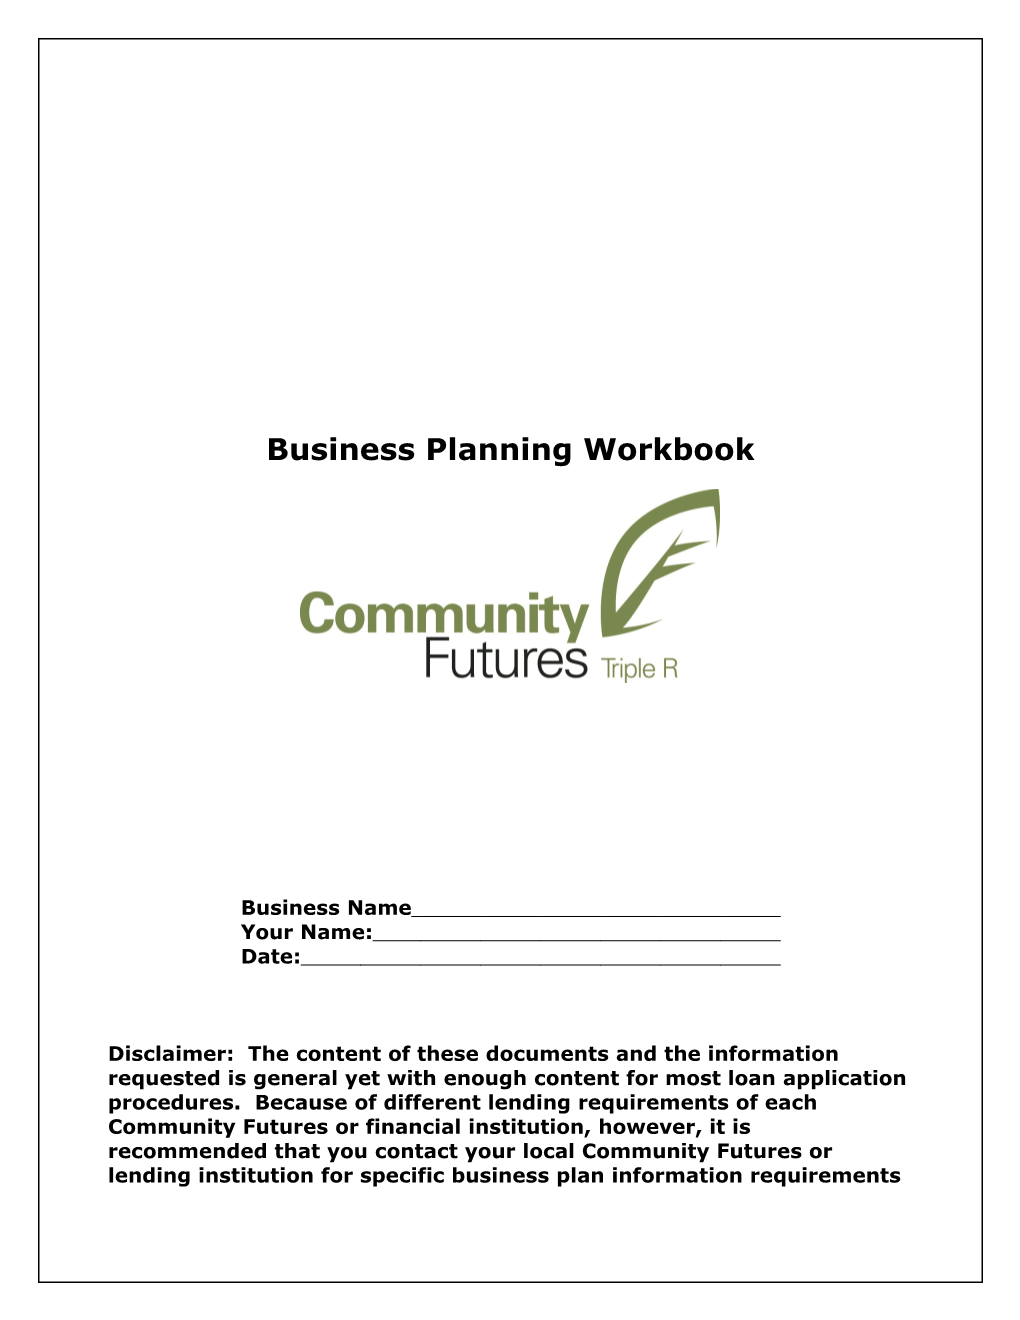 Plain Language Business Planning Workbook